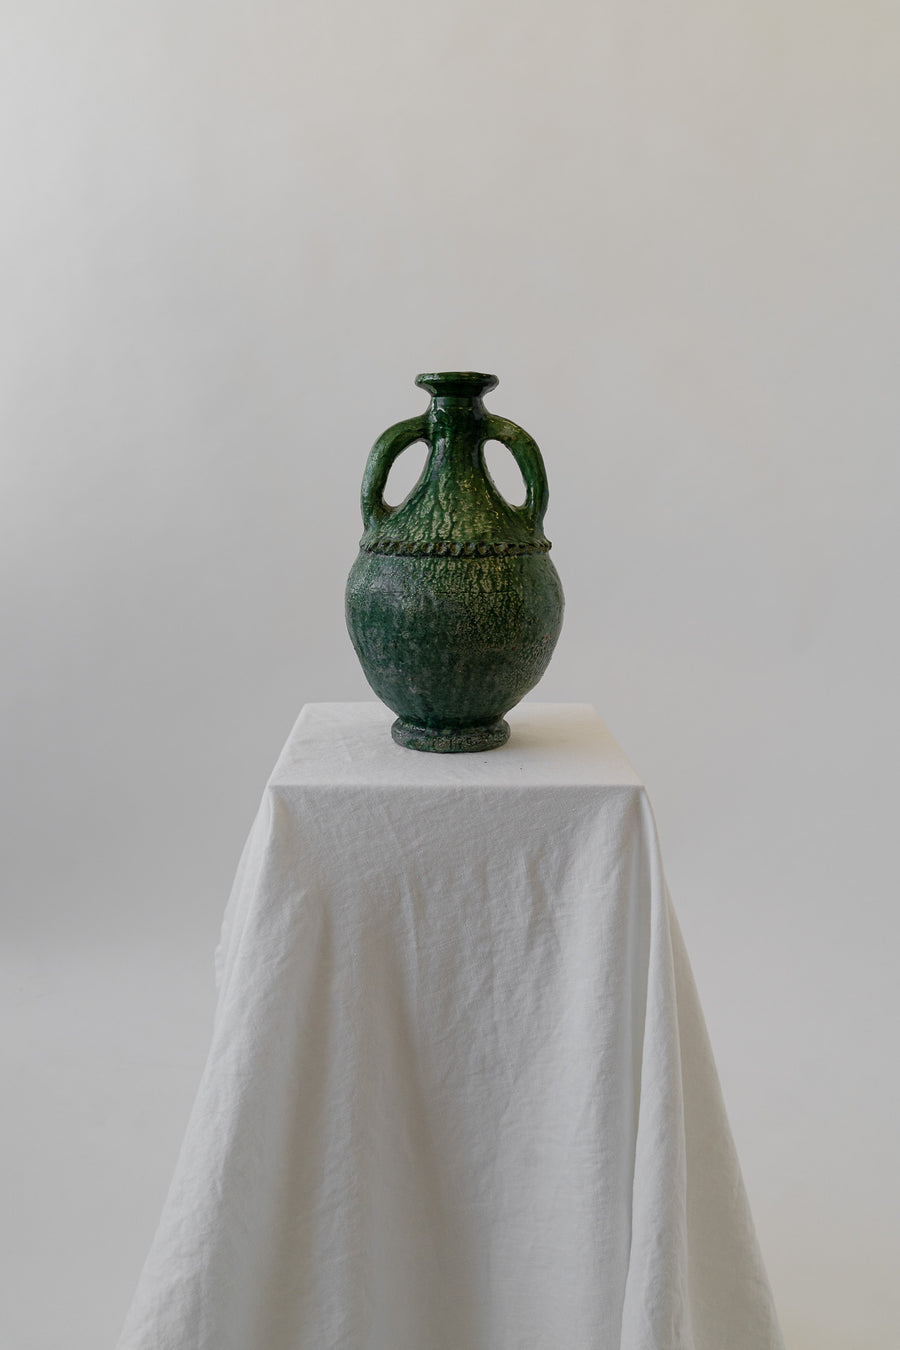 Glazed Green Vase with Handles